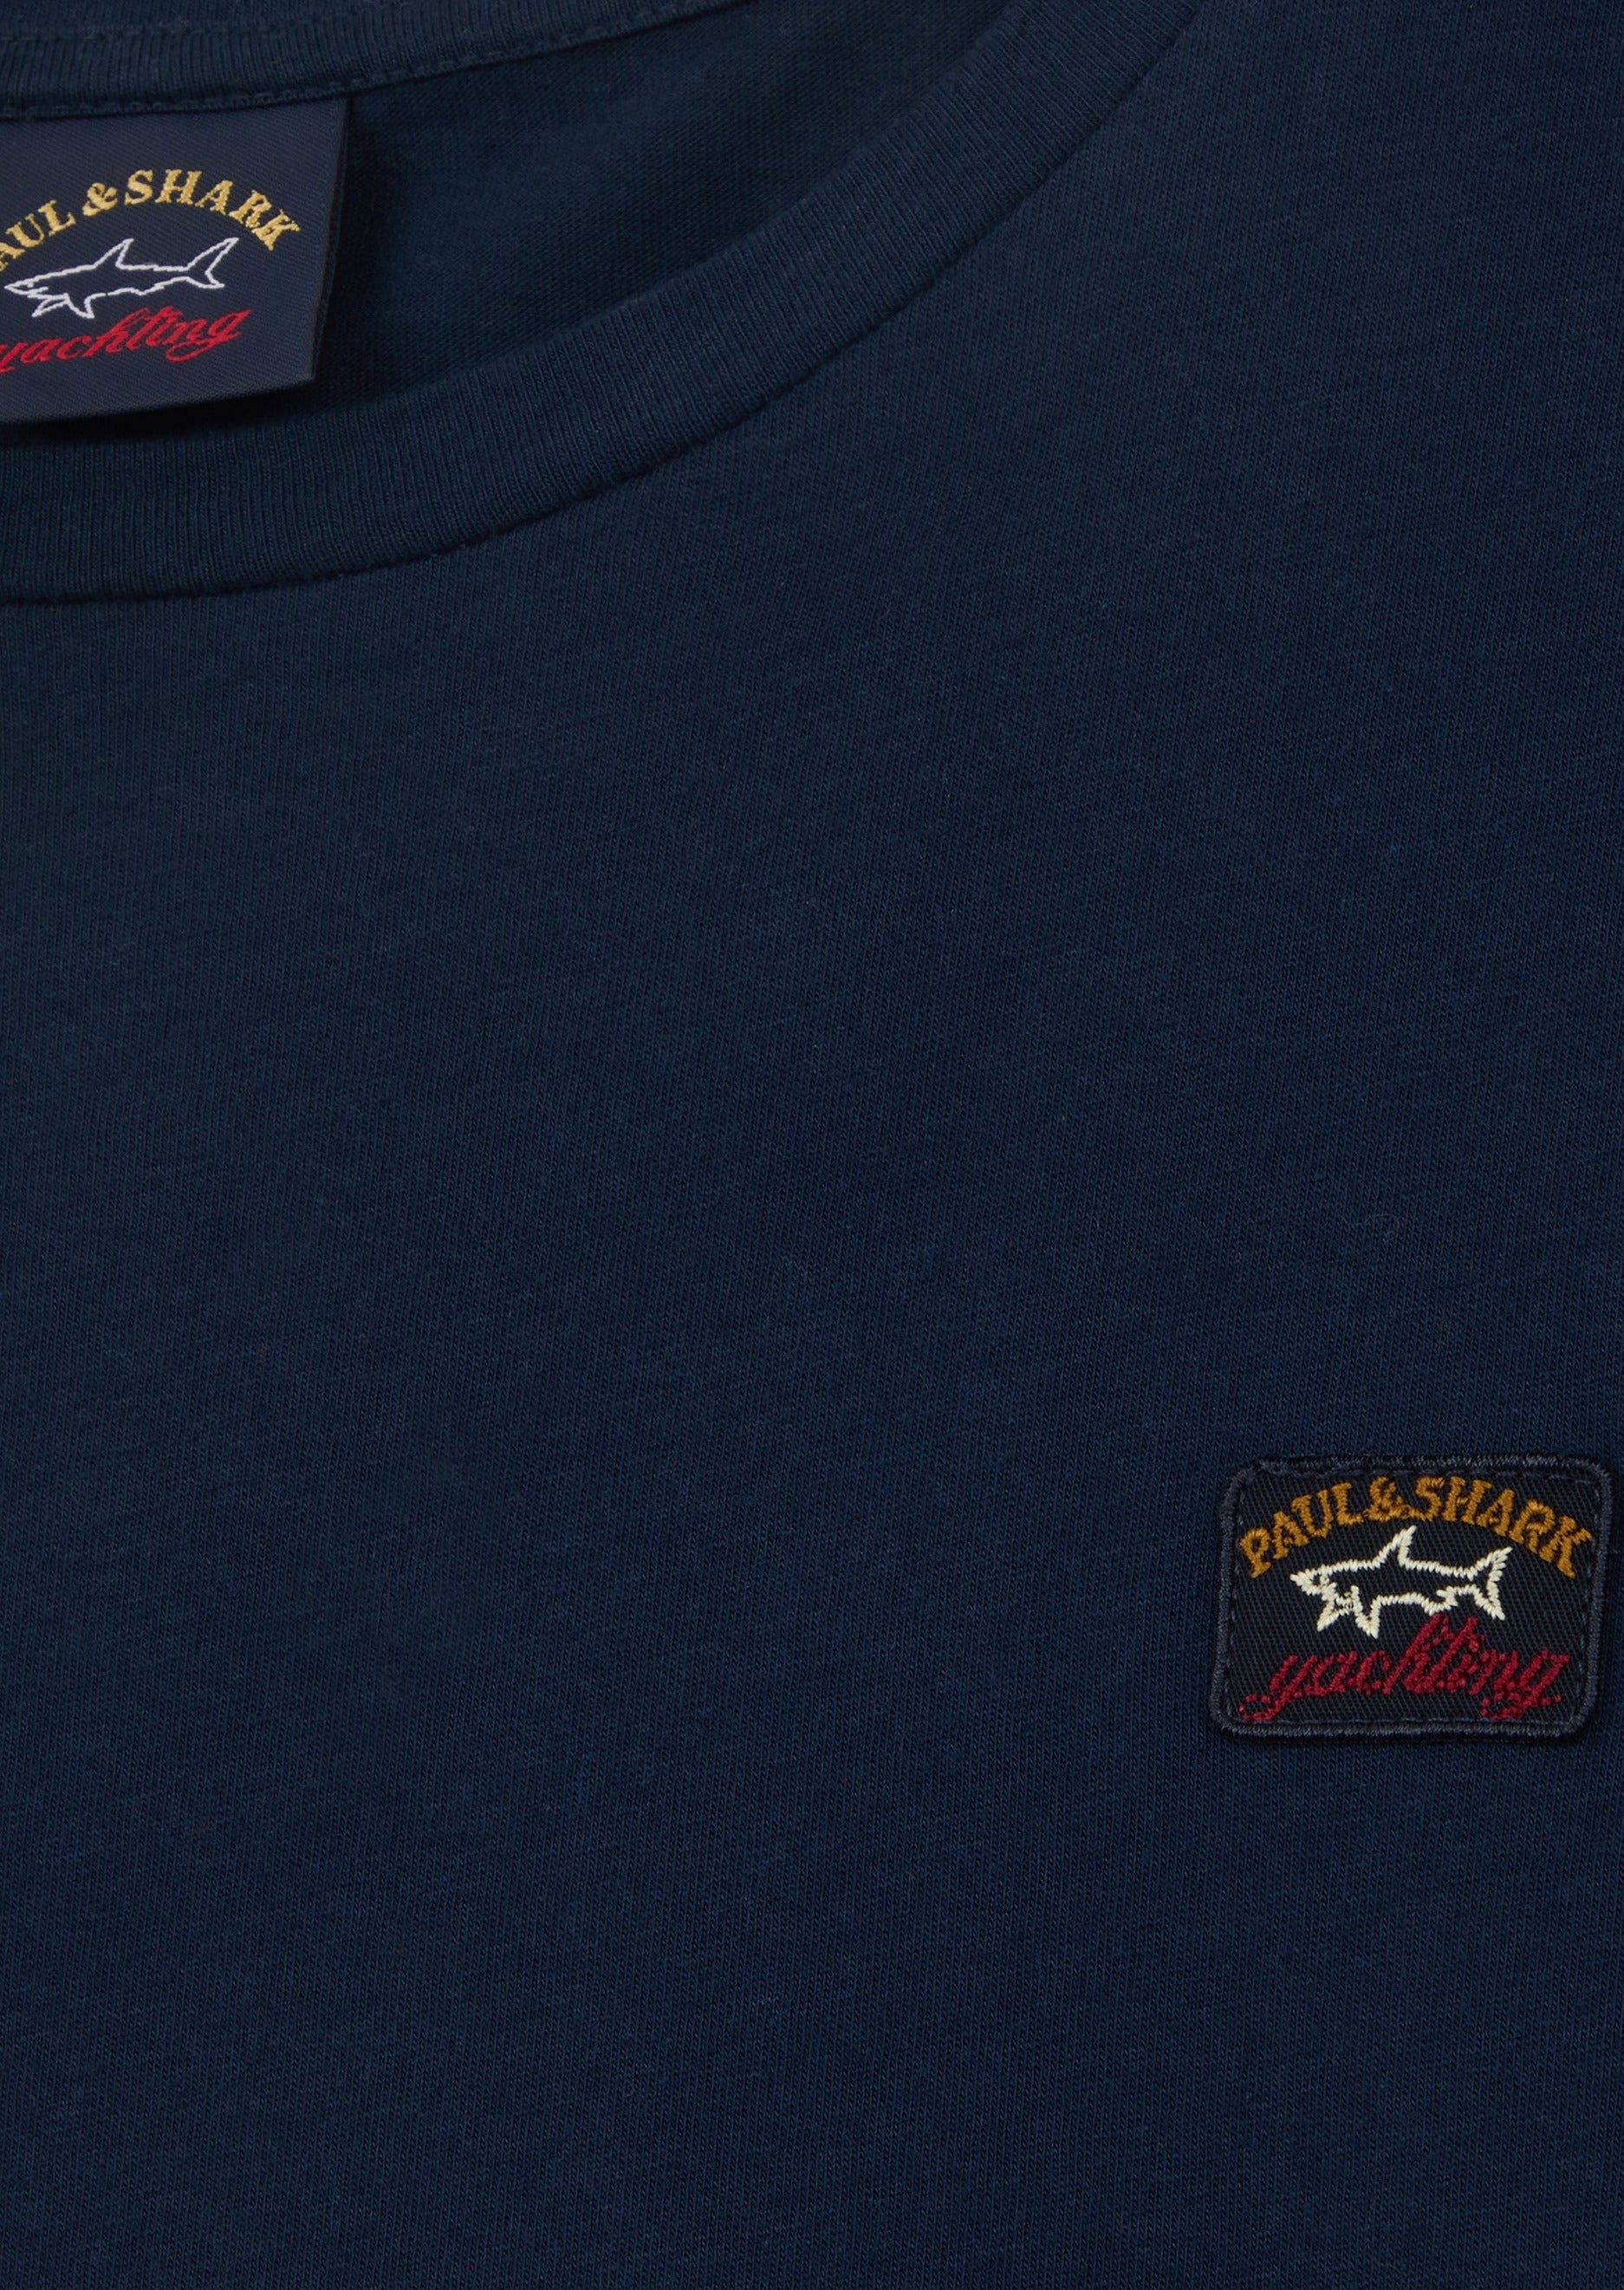 T-Shirt homme Paul & Shark marine | Georgespaul